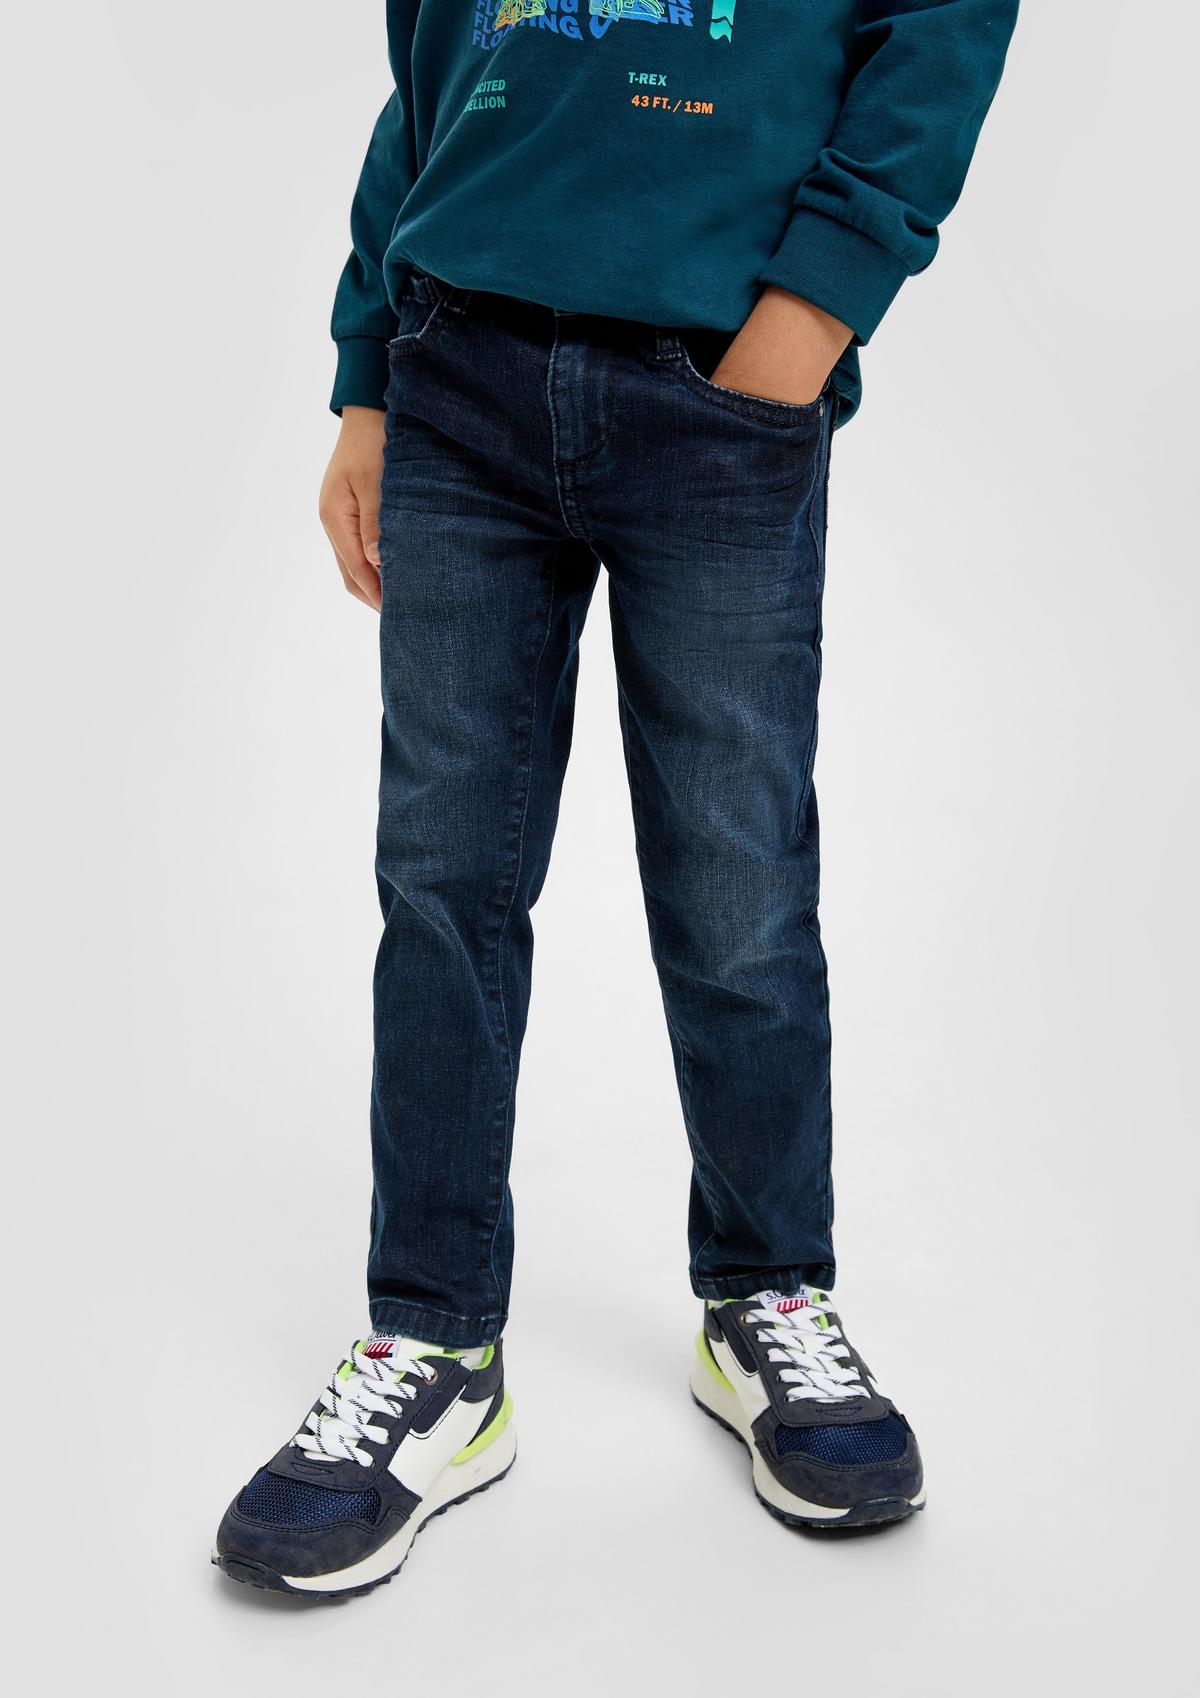 Brad jeans / slim fit / mid rise / slim leg